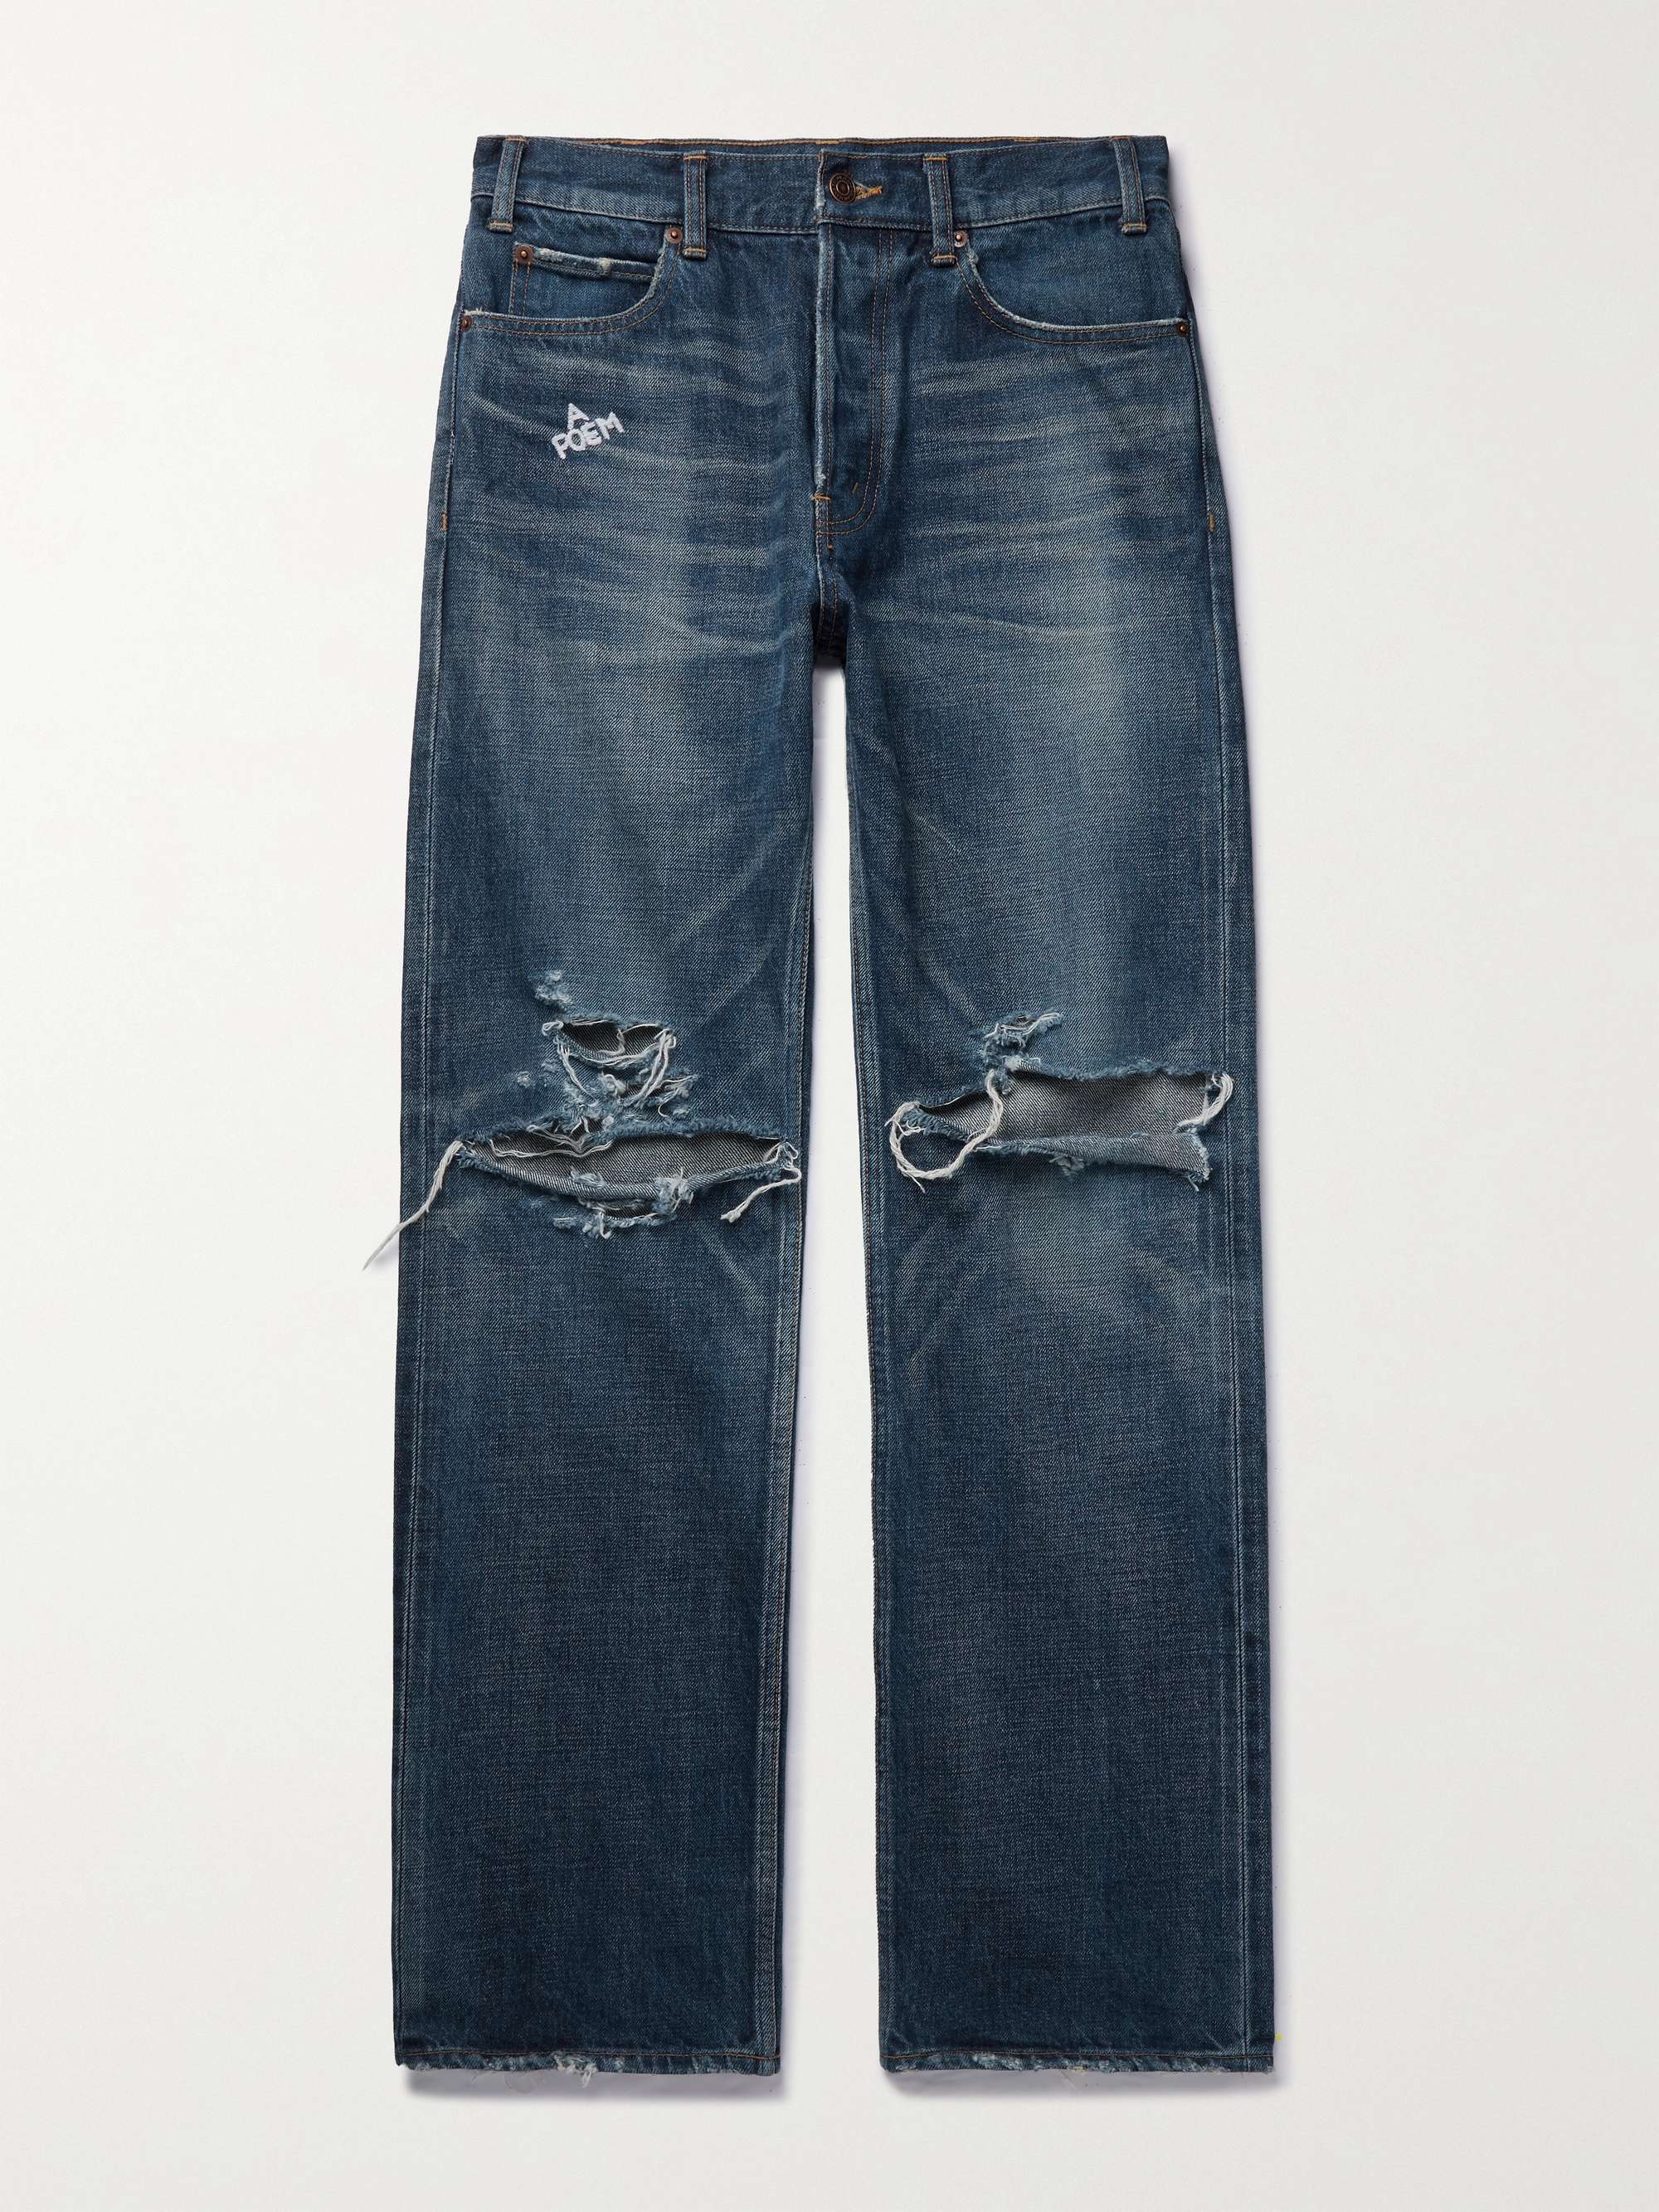 CELINE HOMME Kurt Distressed Selvedge Jeans | MR PORTER